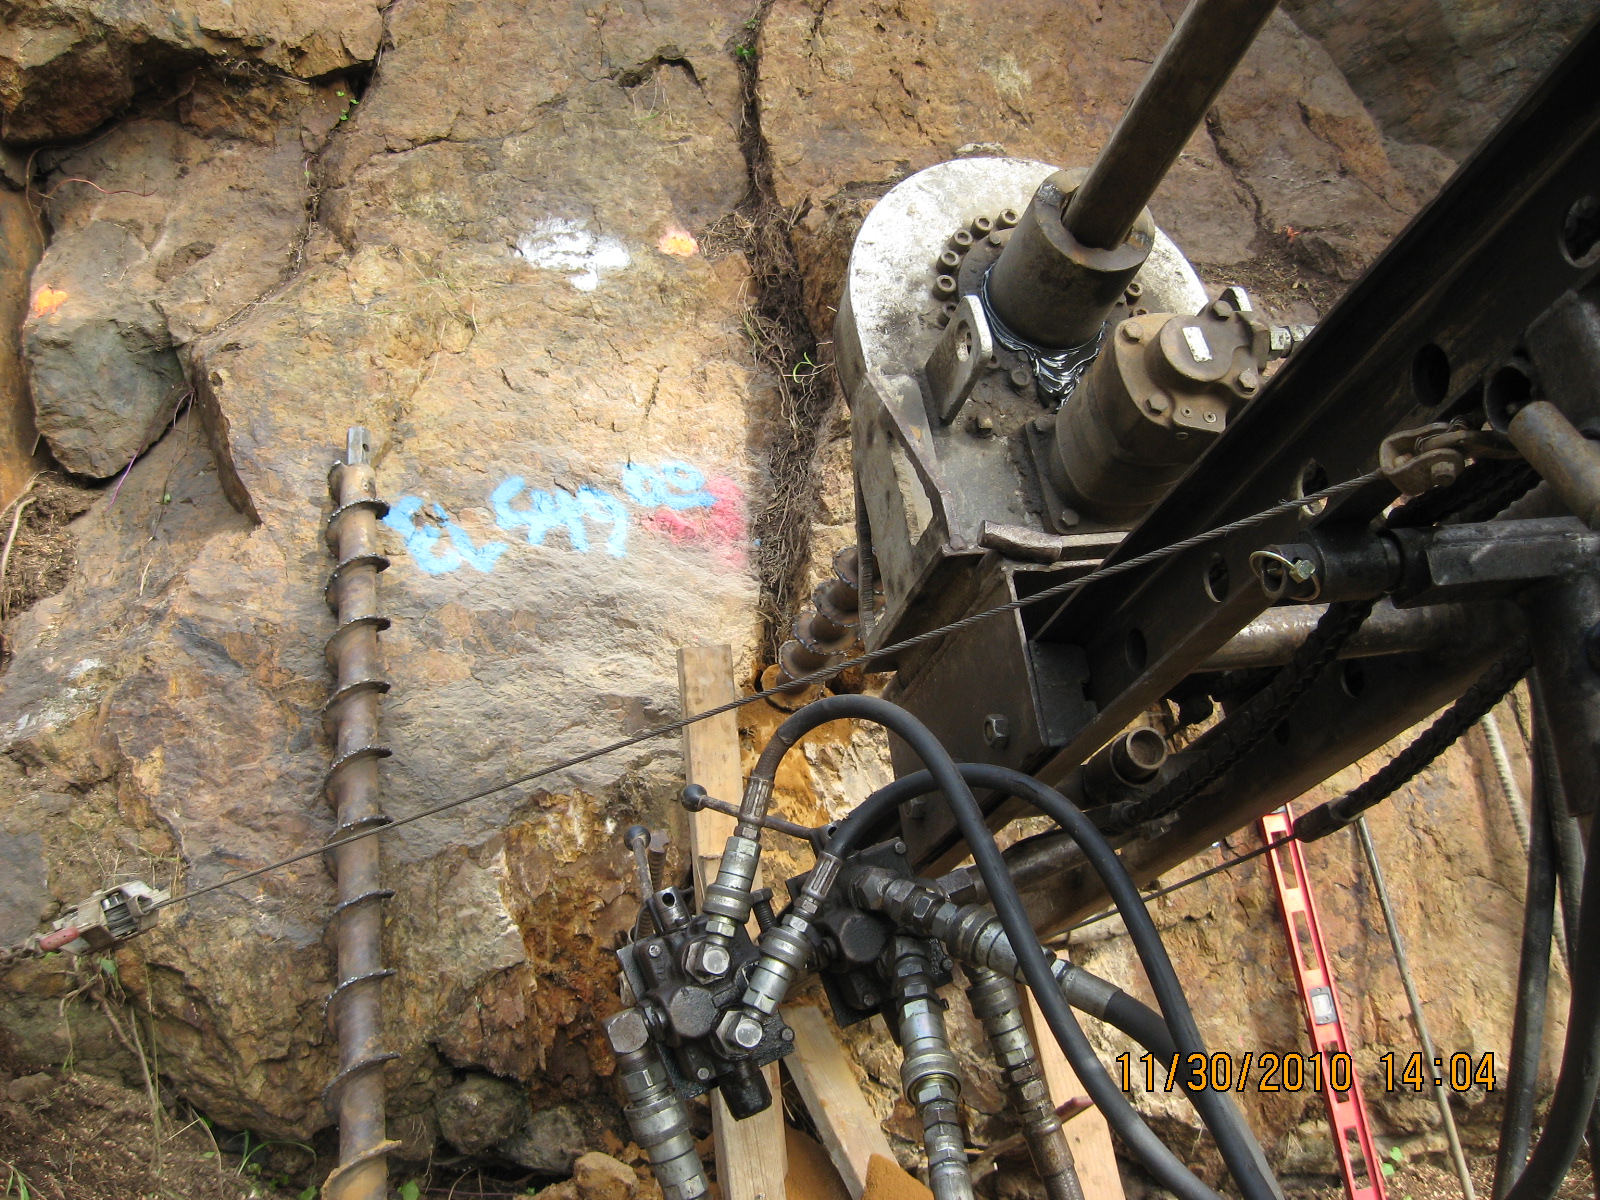 Hard rock drilling in remote location